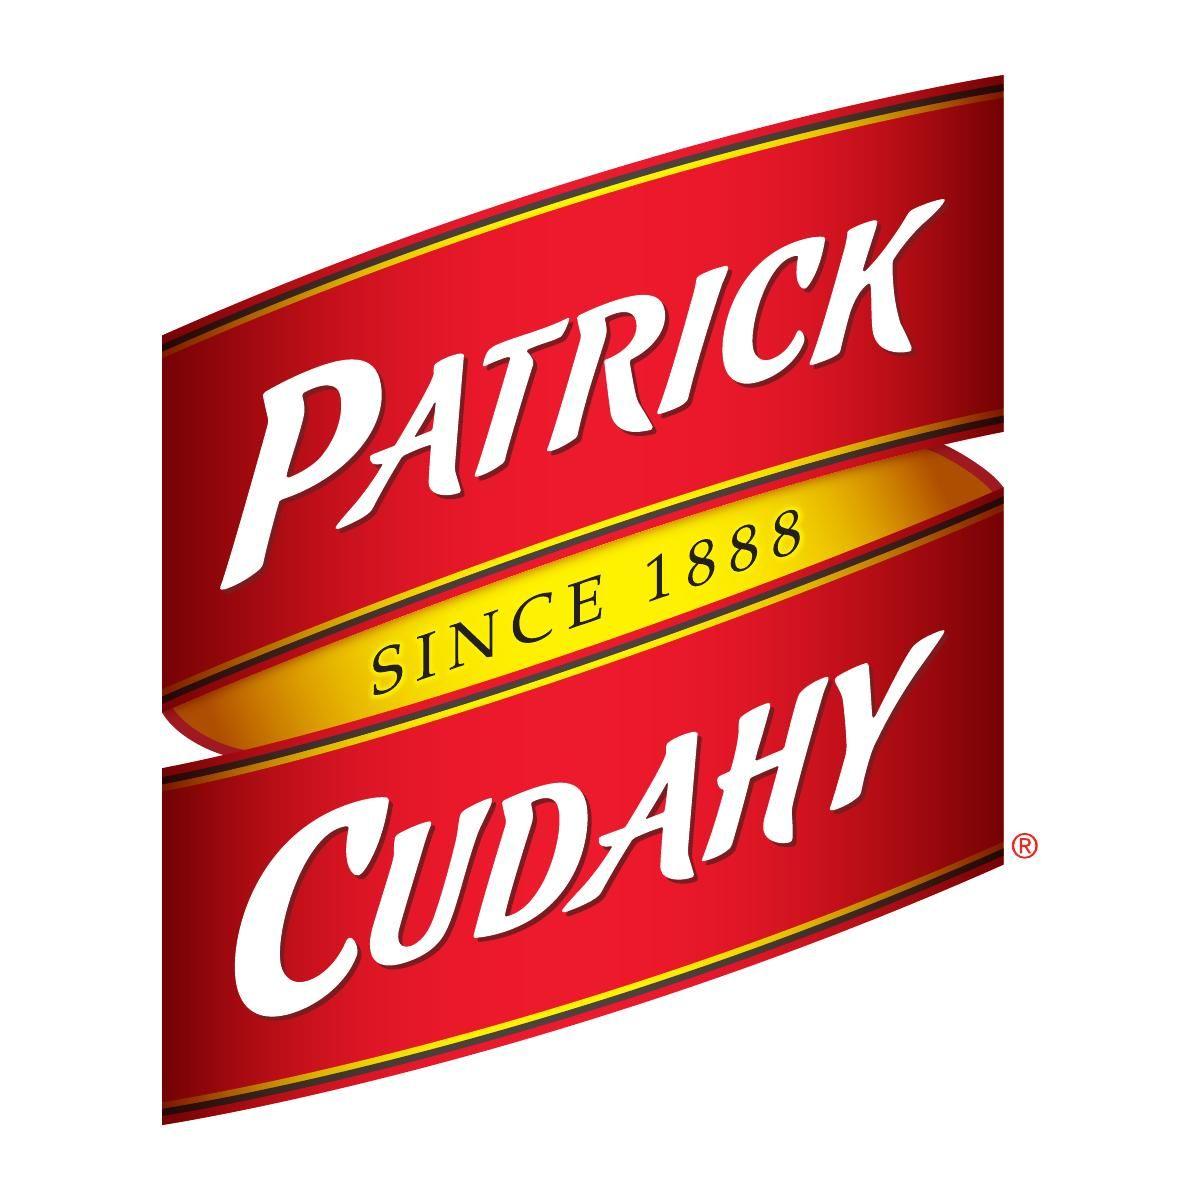 Patrick Logo - Patrick Cudahy logo